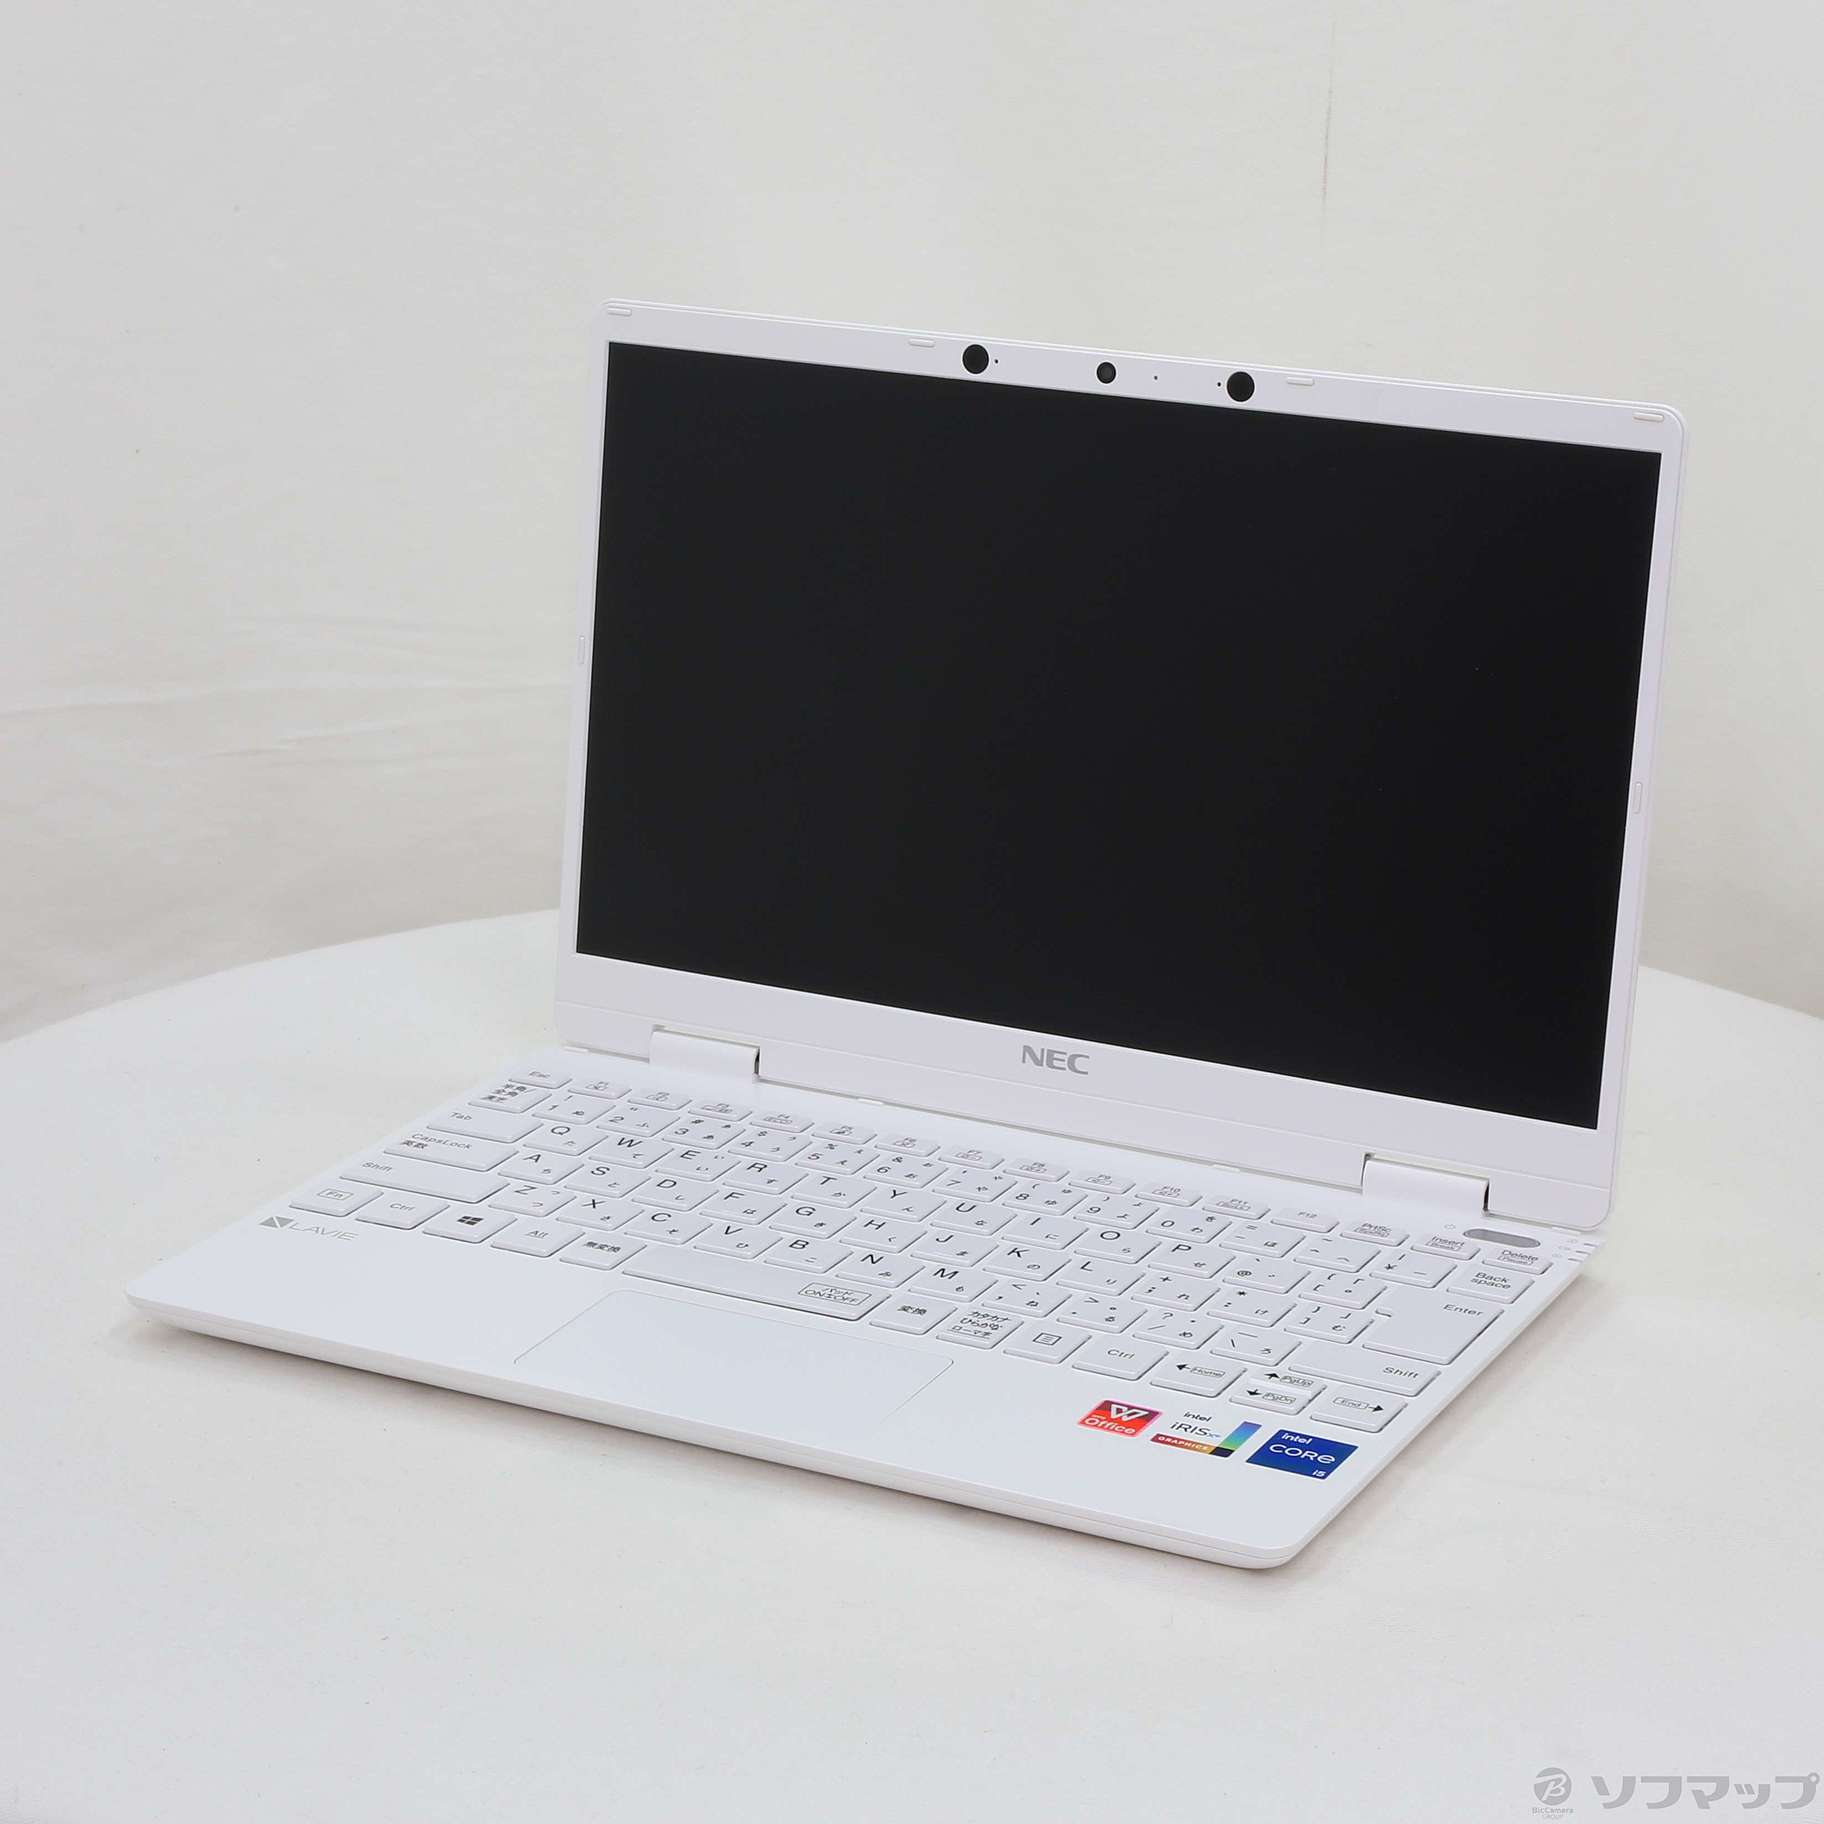 NEC LAVIE Smart N12 パールホワイト パソコン pc - rehda.com